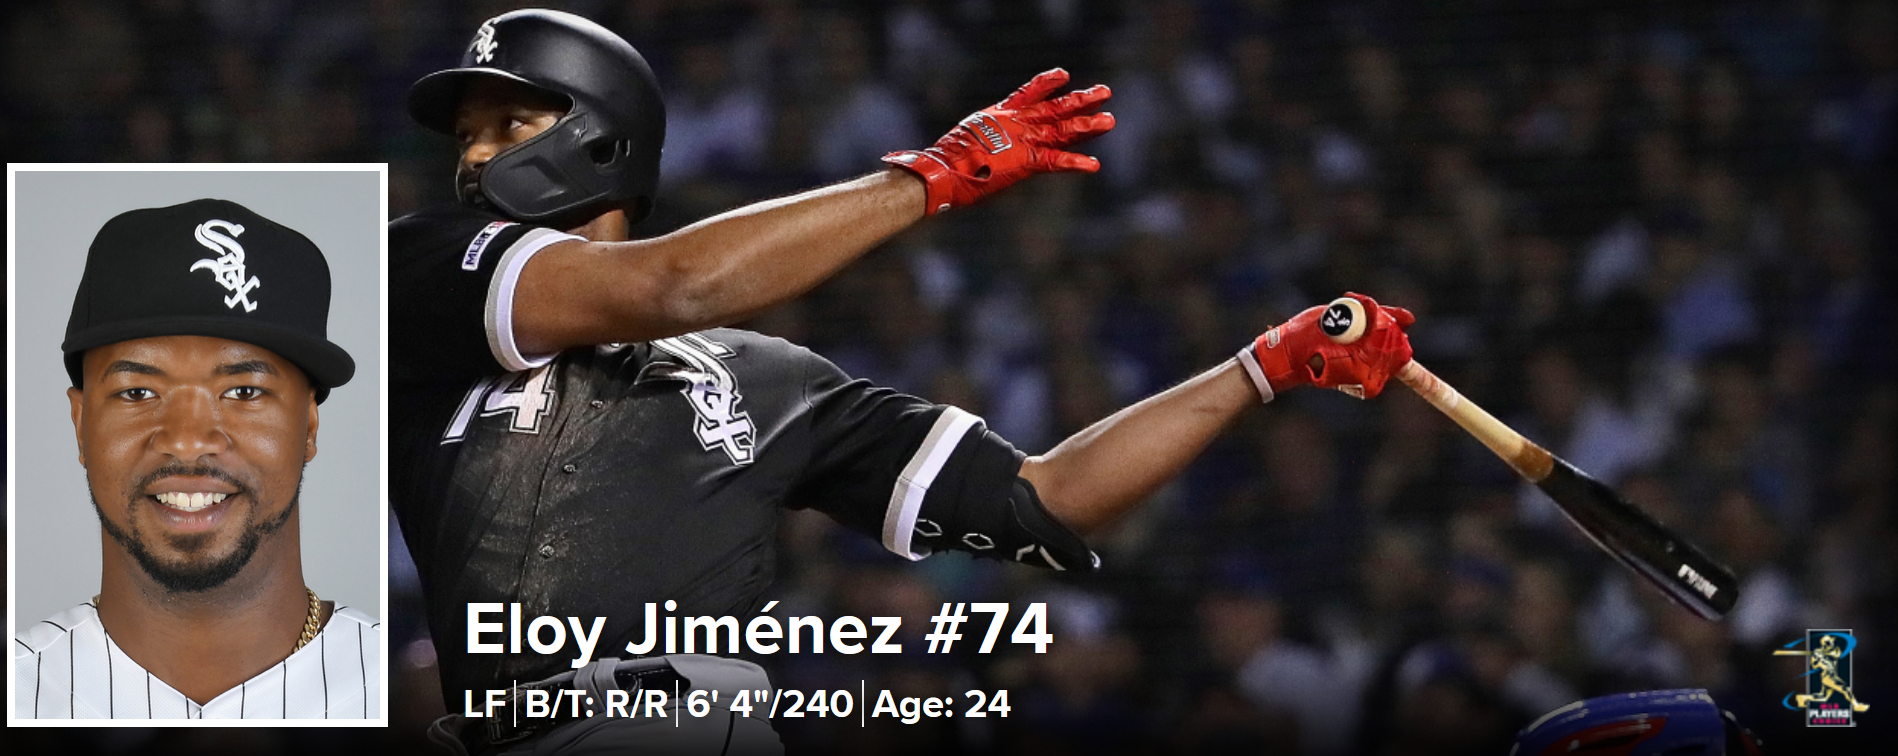 Eloy Jimenez - Baseball Stats - The Baseball Cube